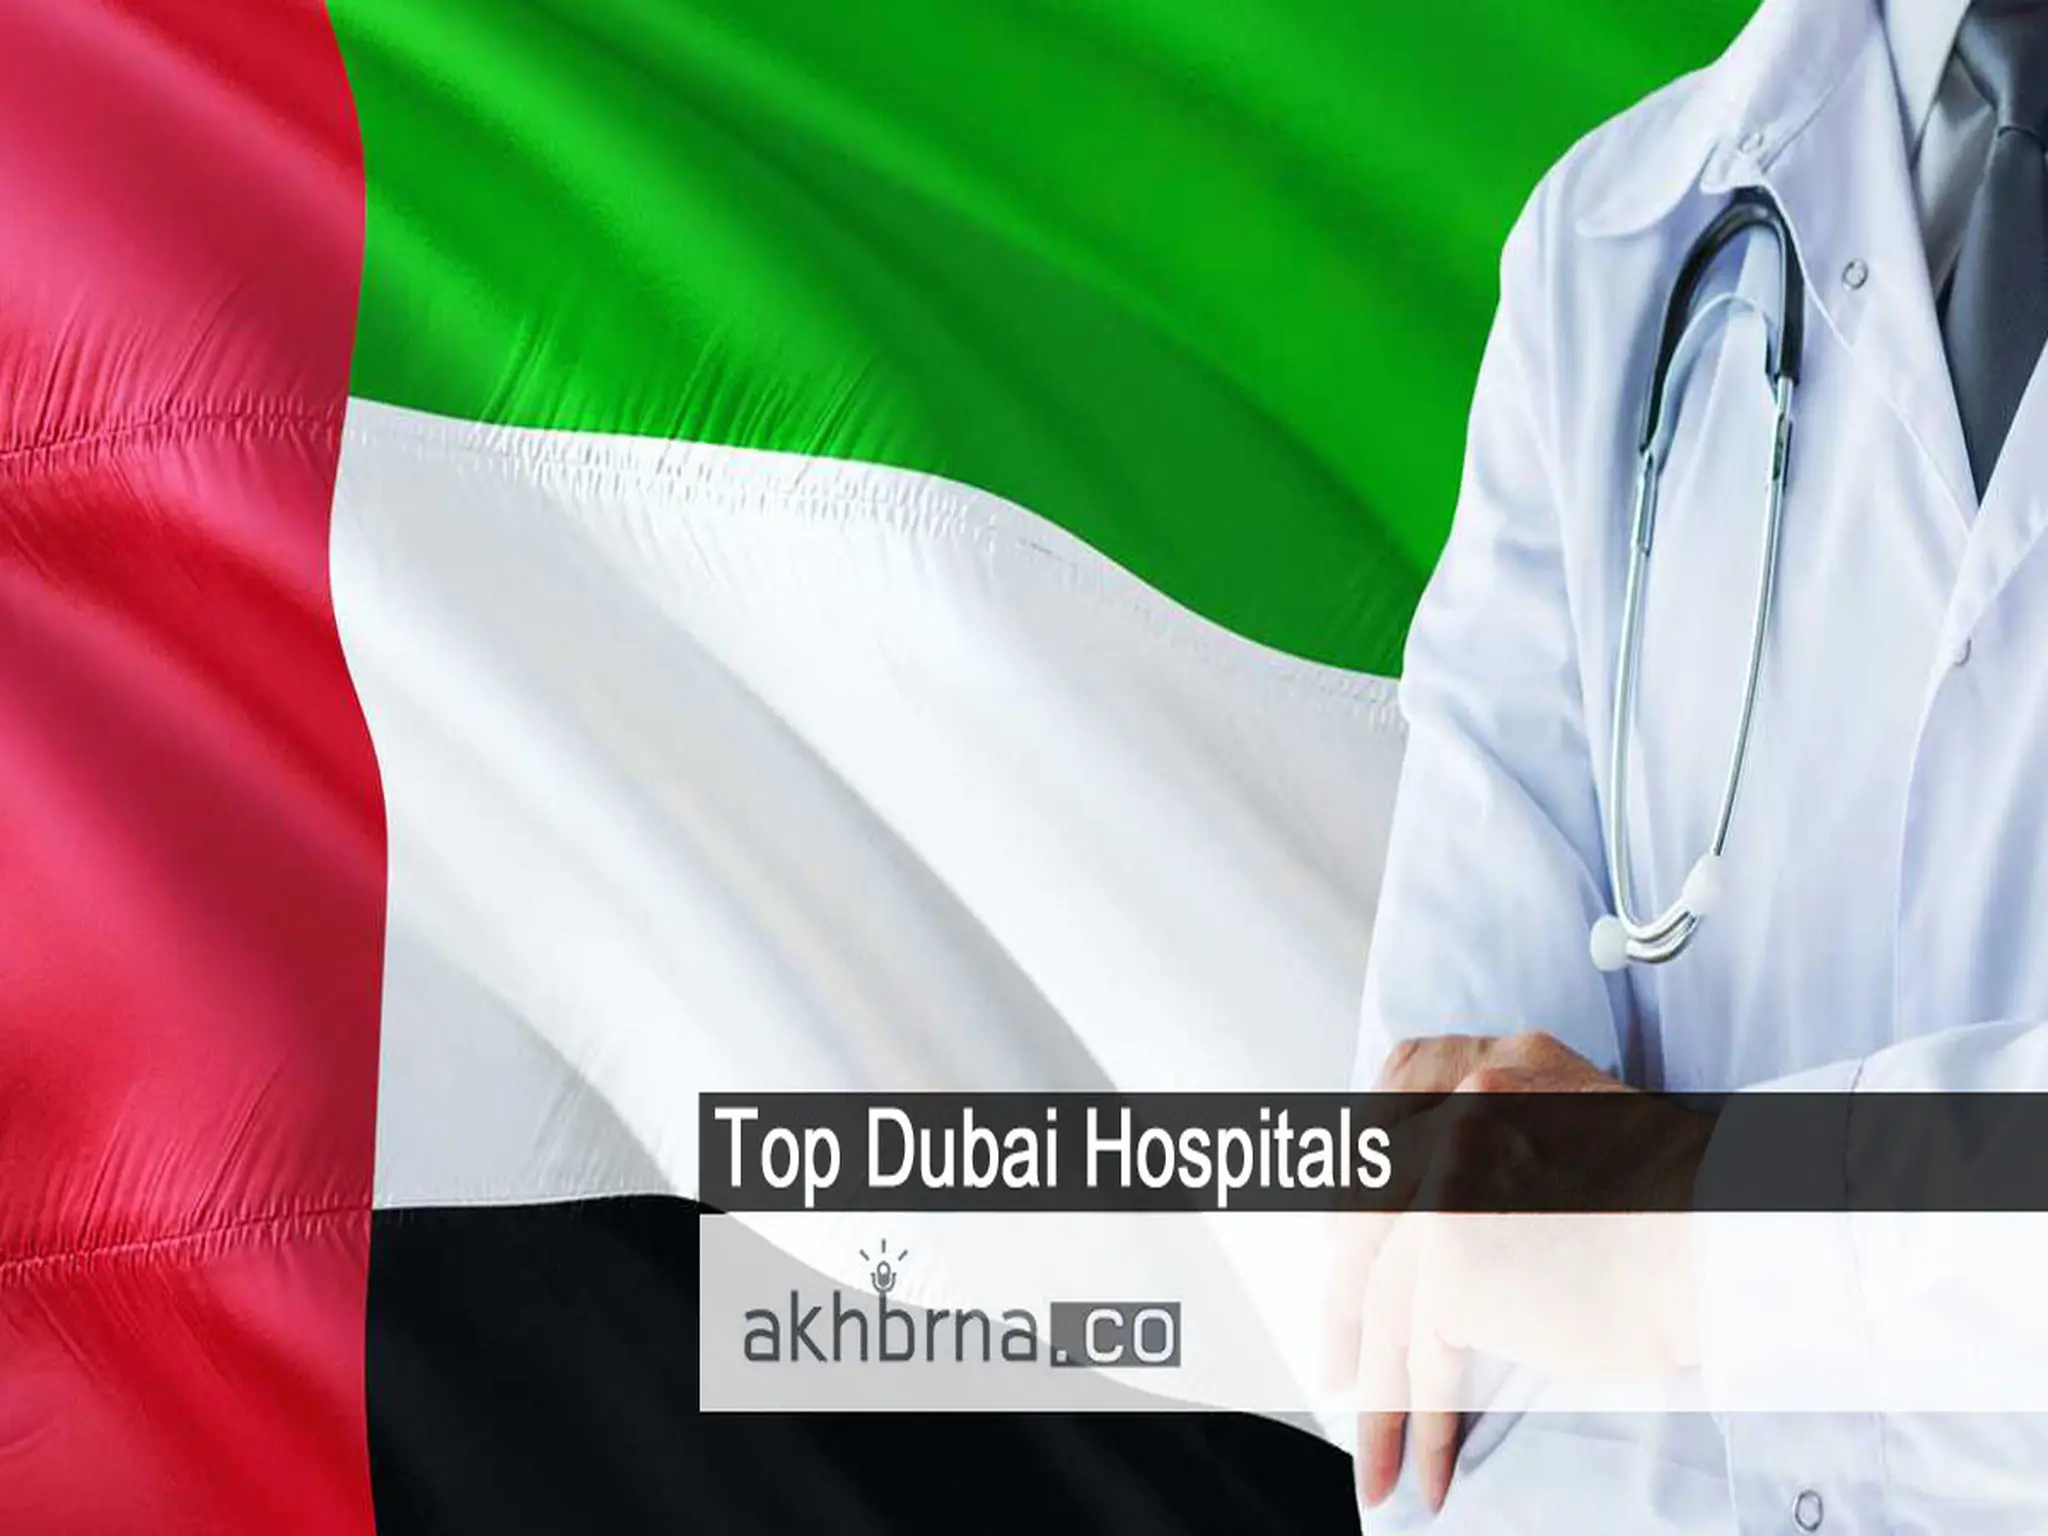 Top Dubai Hospitals: Addresses and Prices